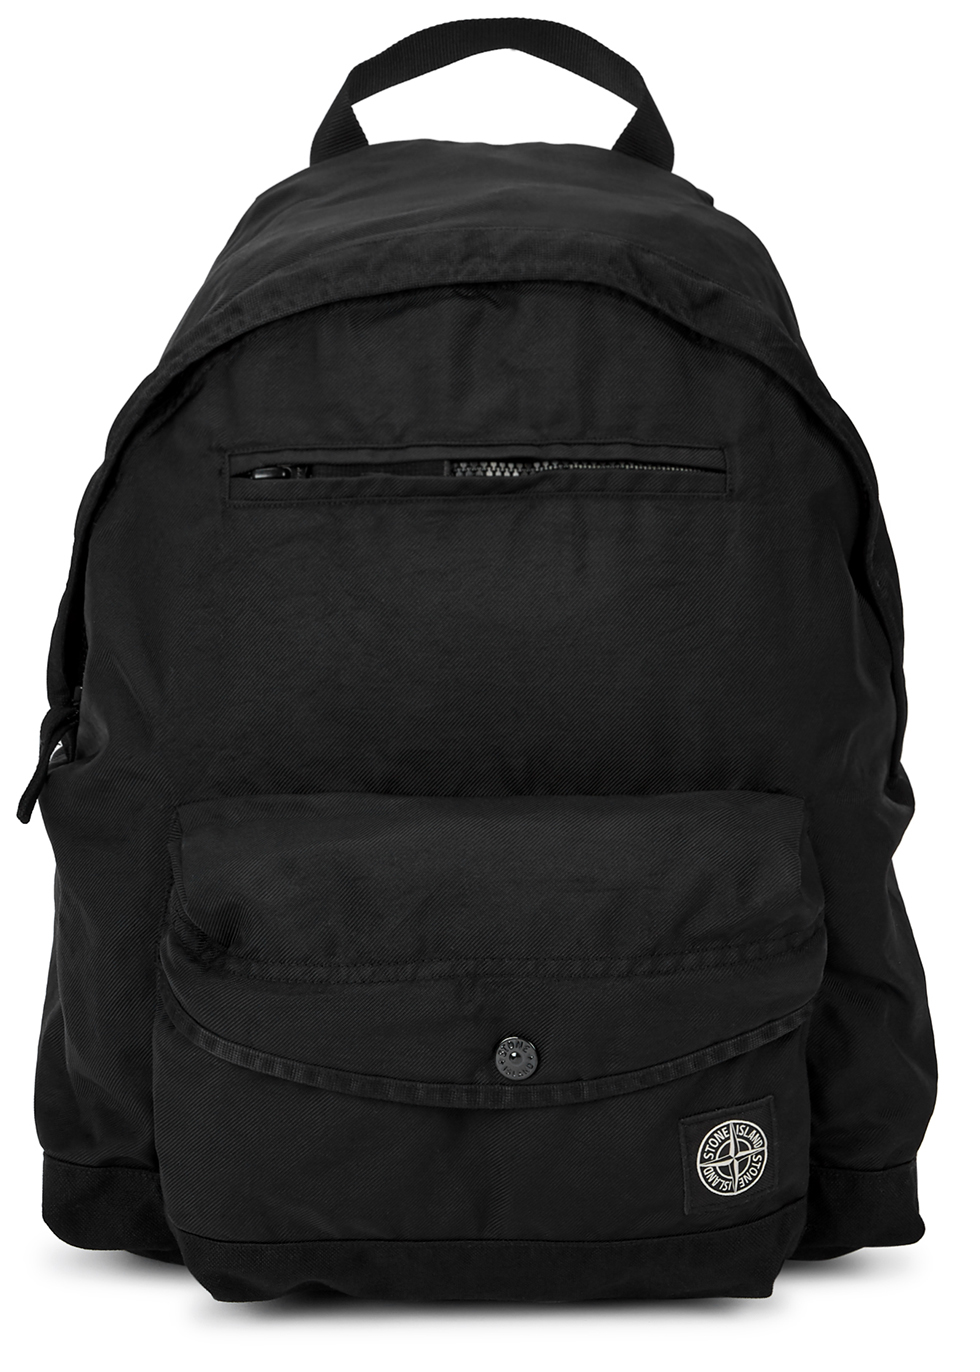 Stone Island Black logo canvas backpack - Harvey Nichols